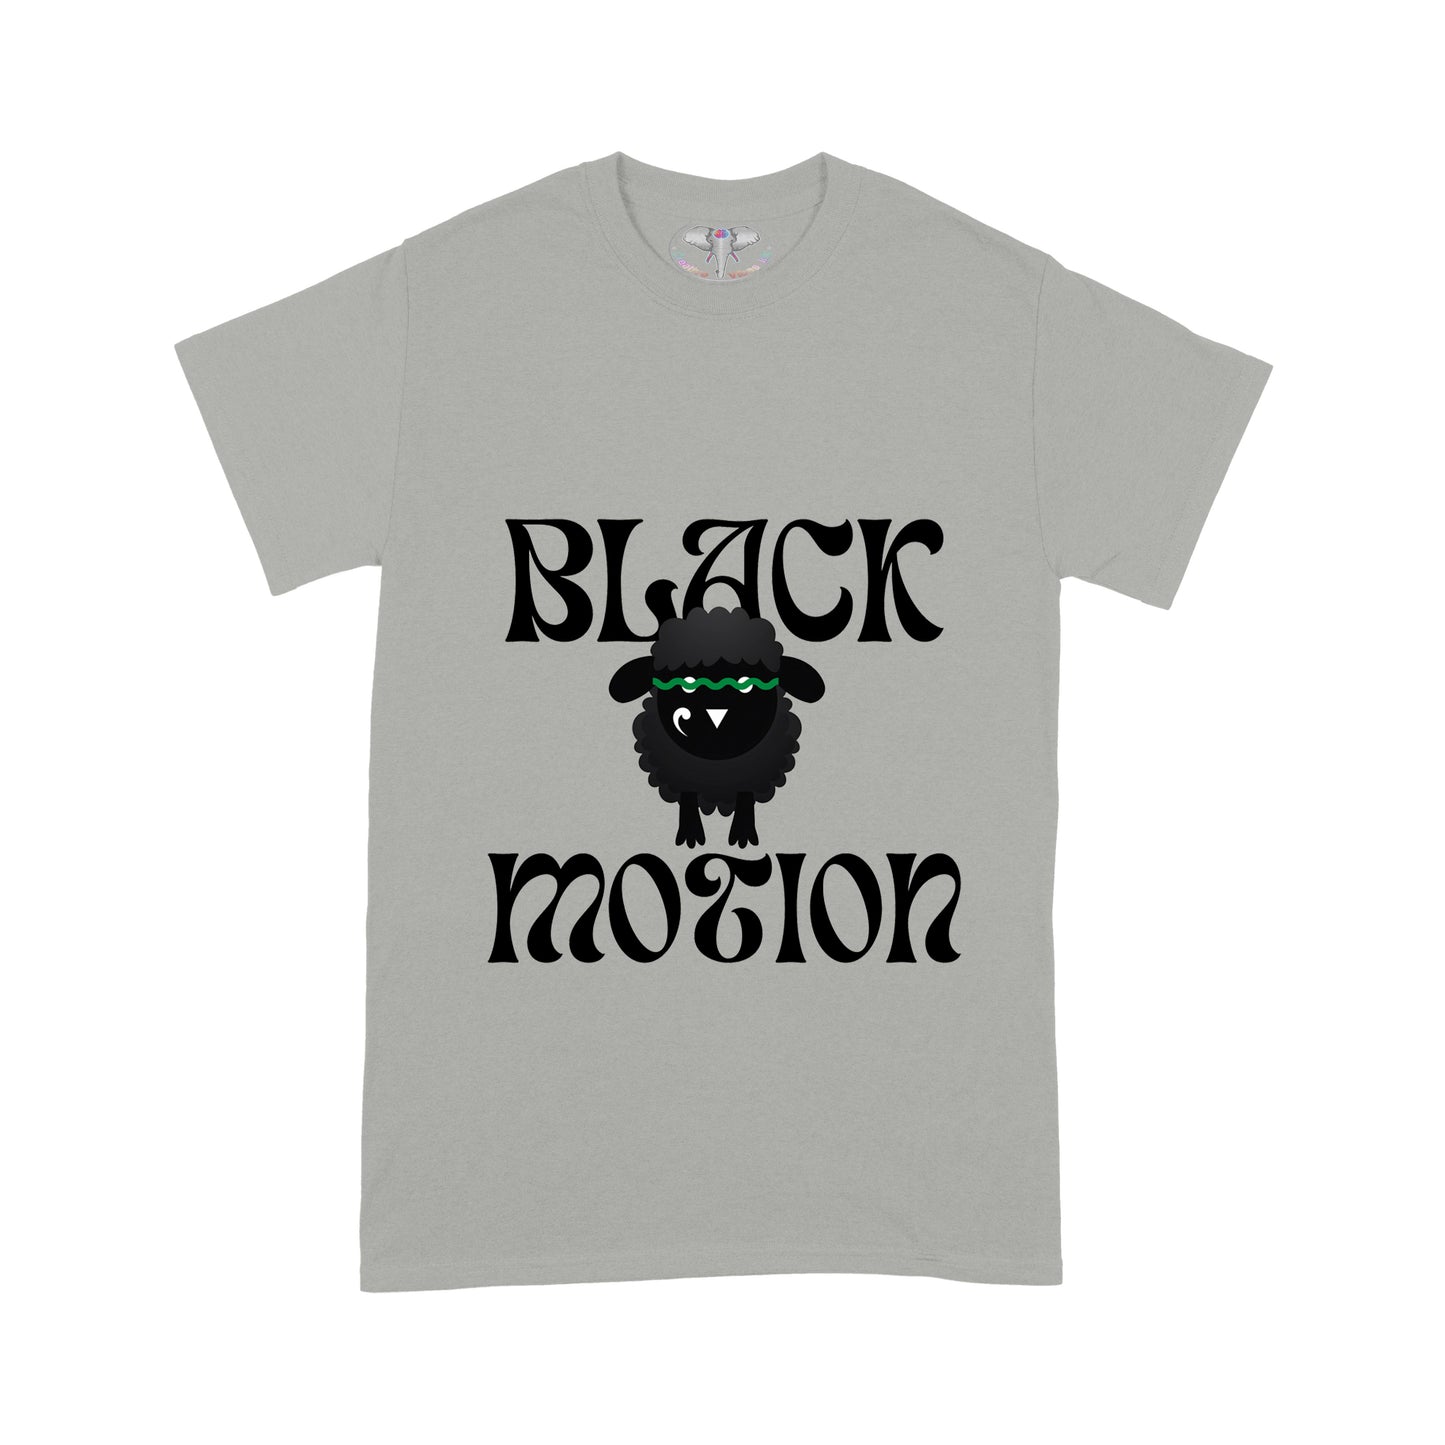 Black Sheep Motion Graphic T-Shirt